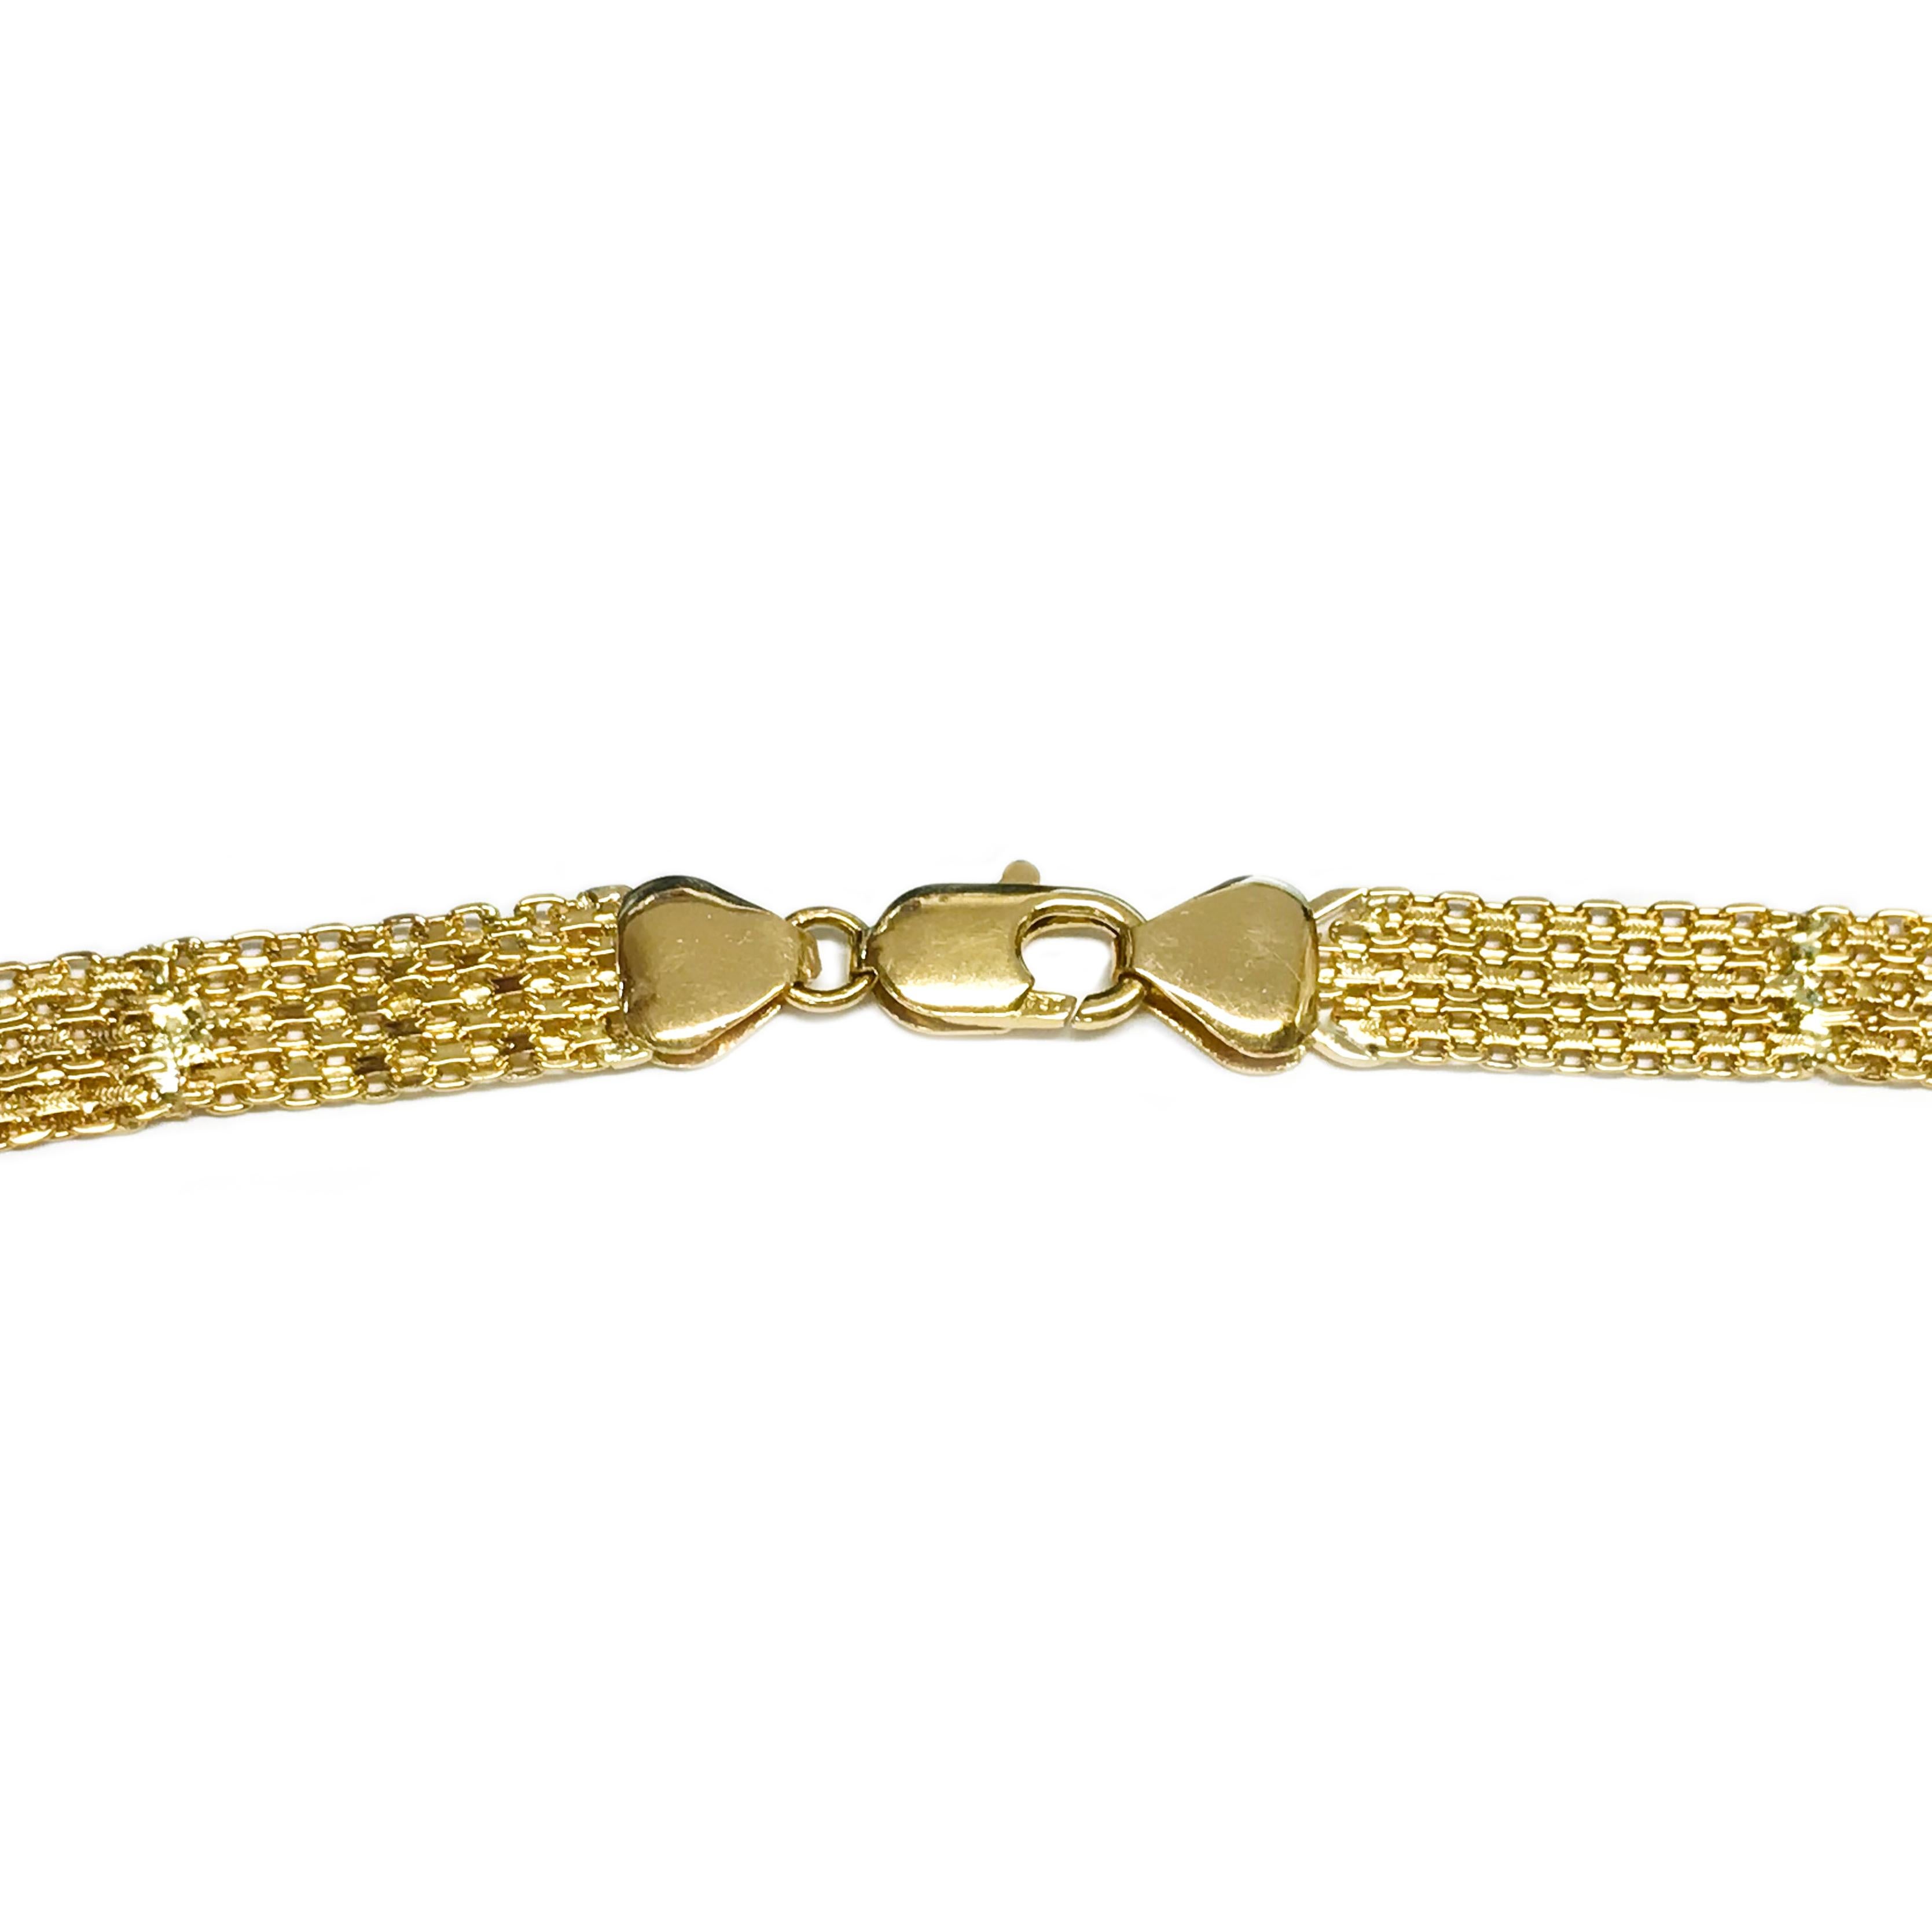 bismark necklace gold